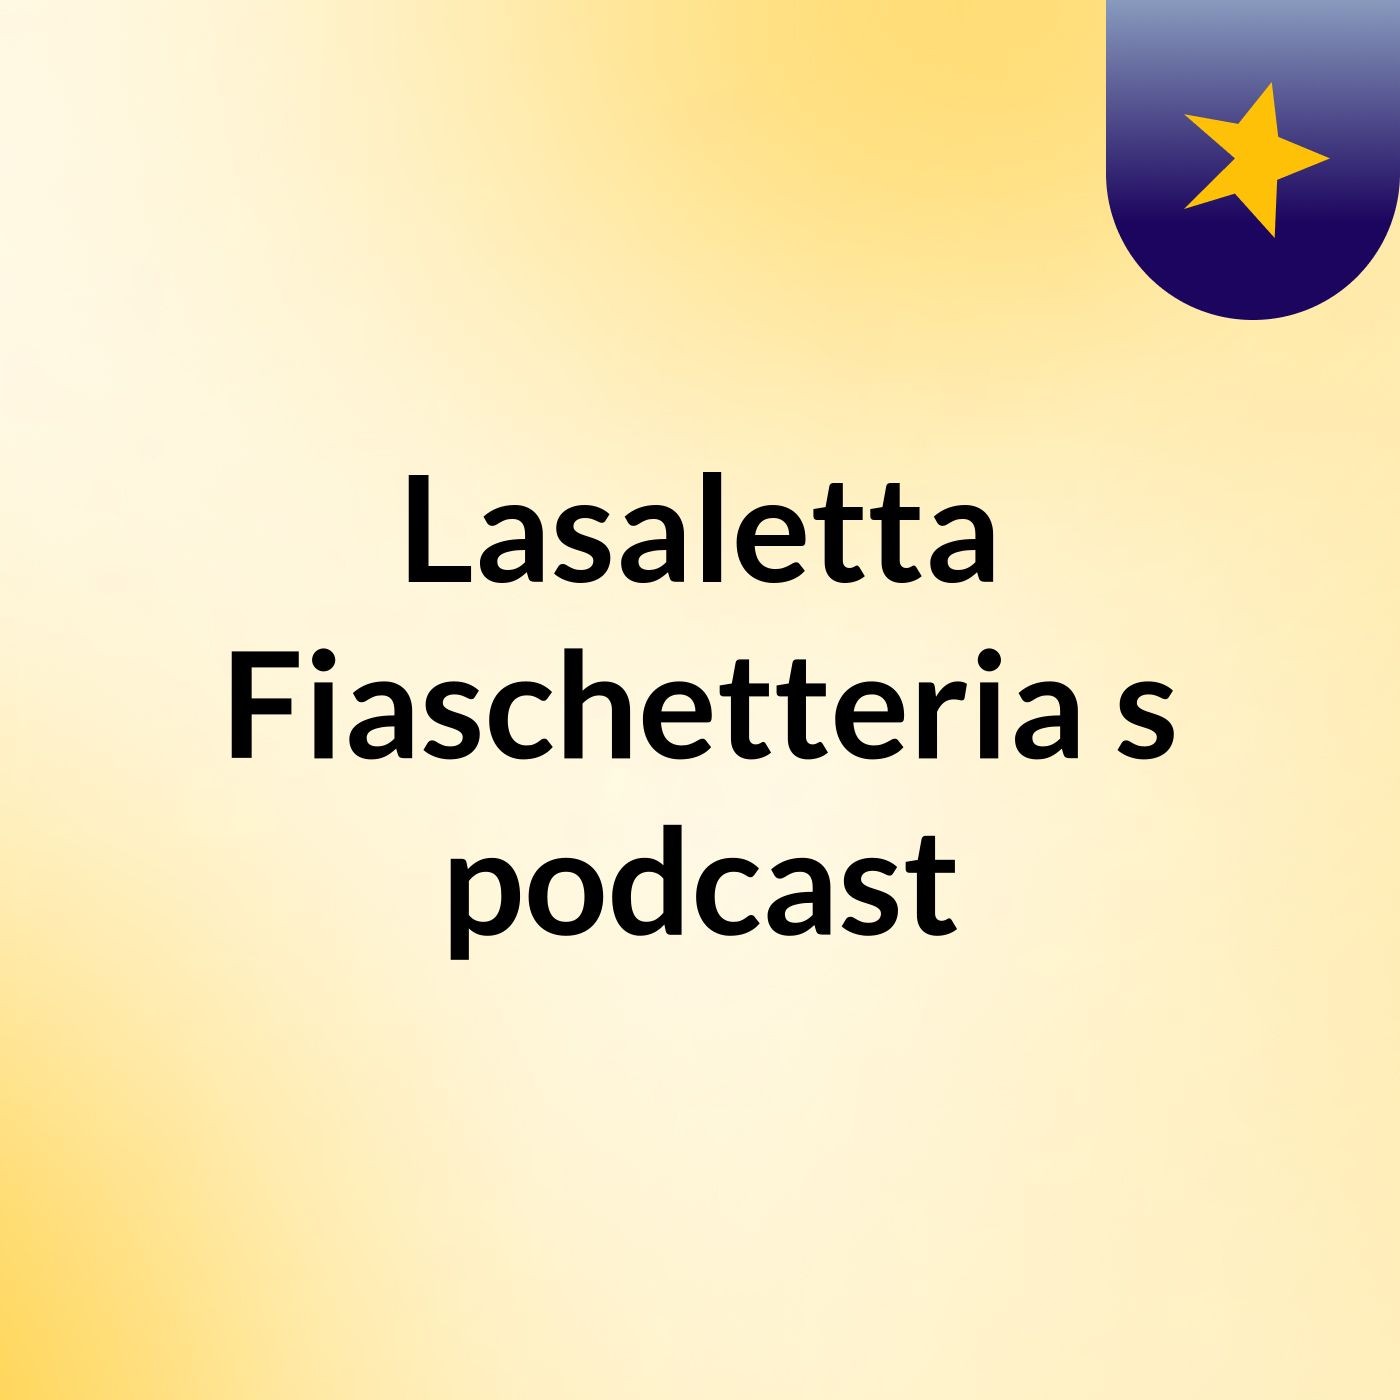 Lasaletta Fiaschetteria's podcast